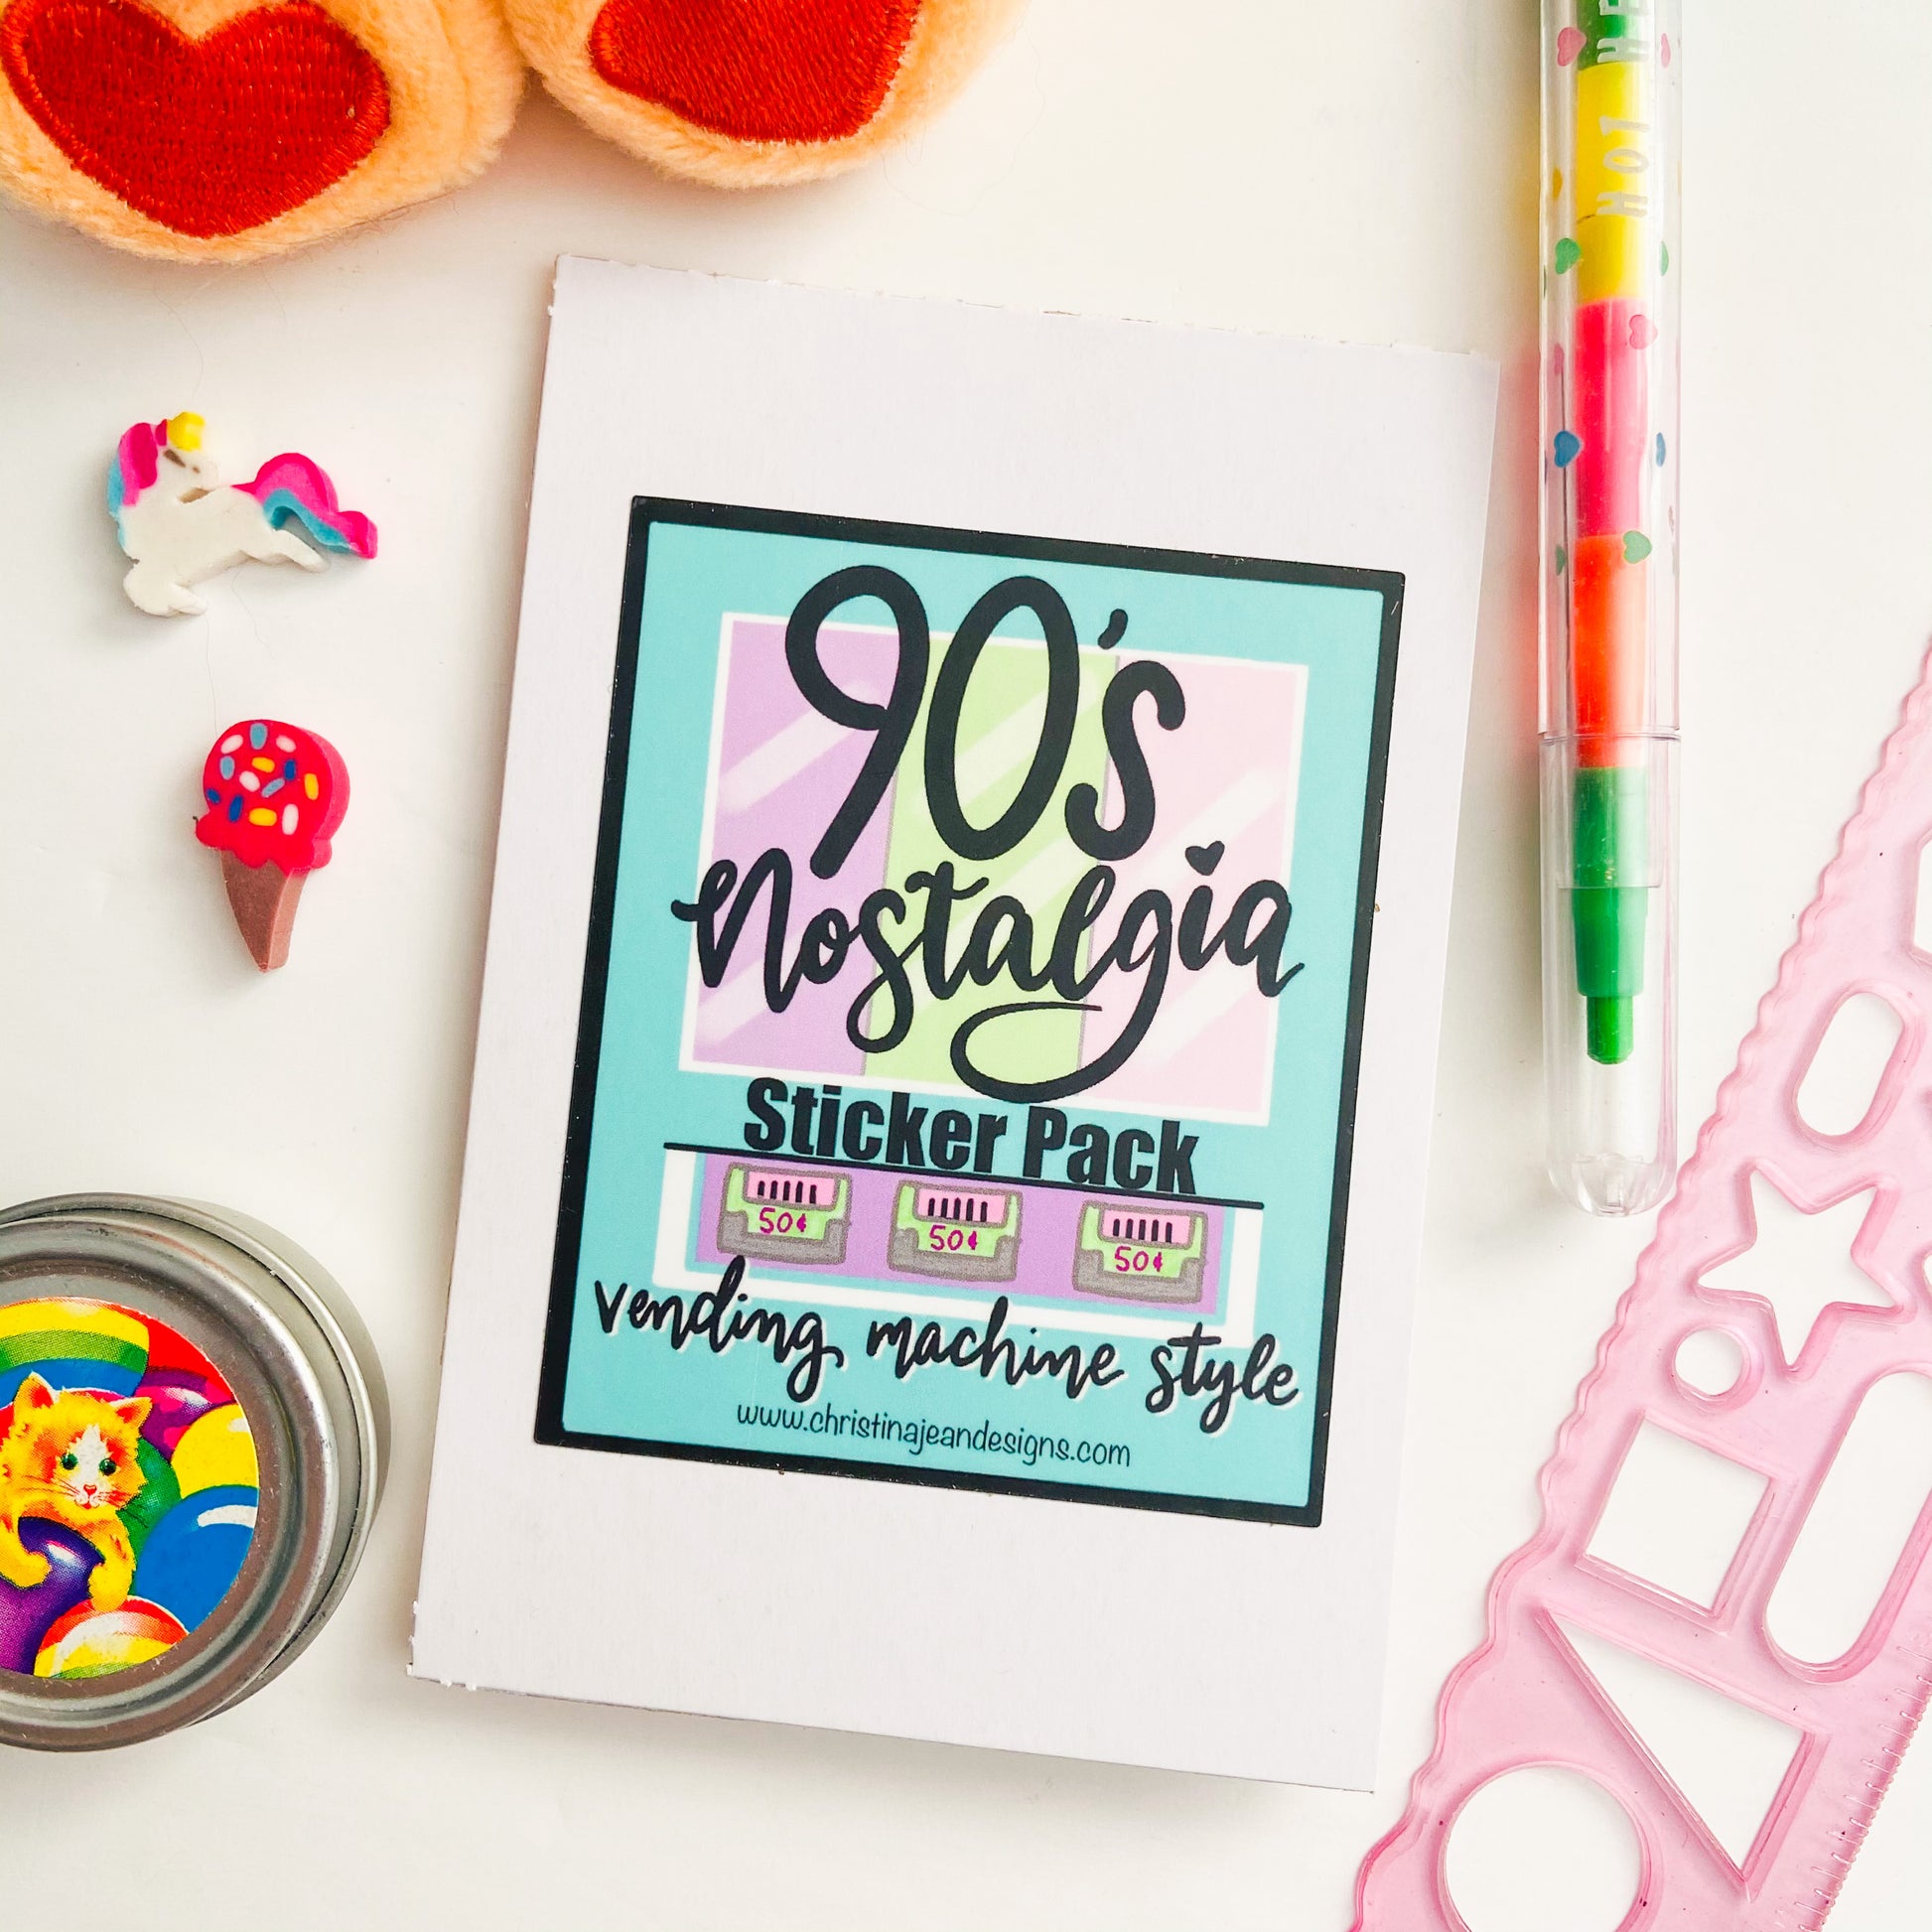 90's Nostalgia Sticker Pack Vol 1 – Christina Jean Designs